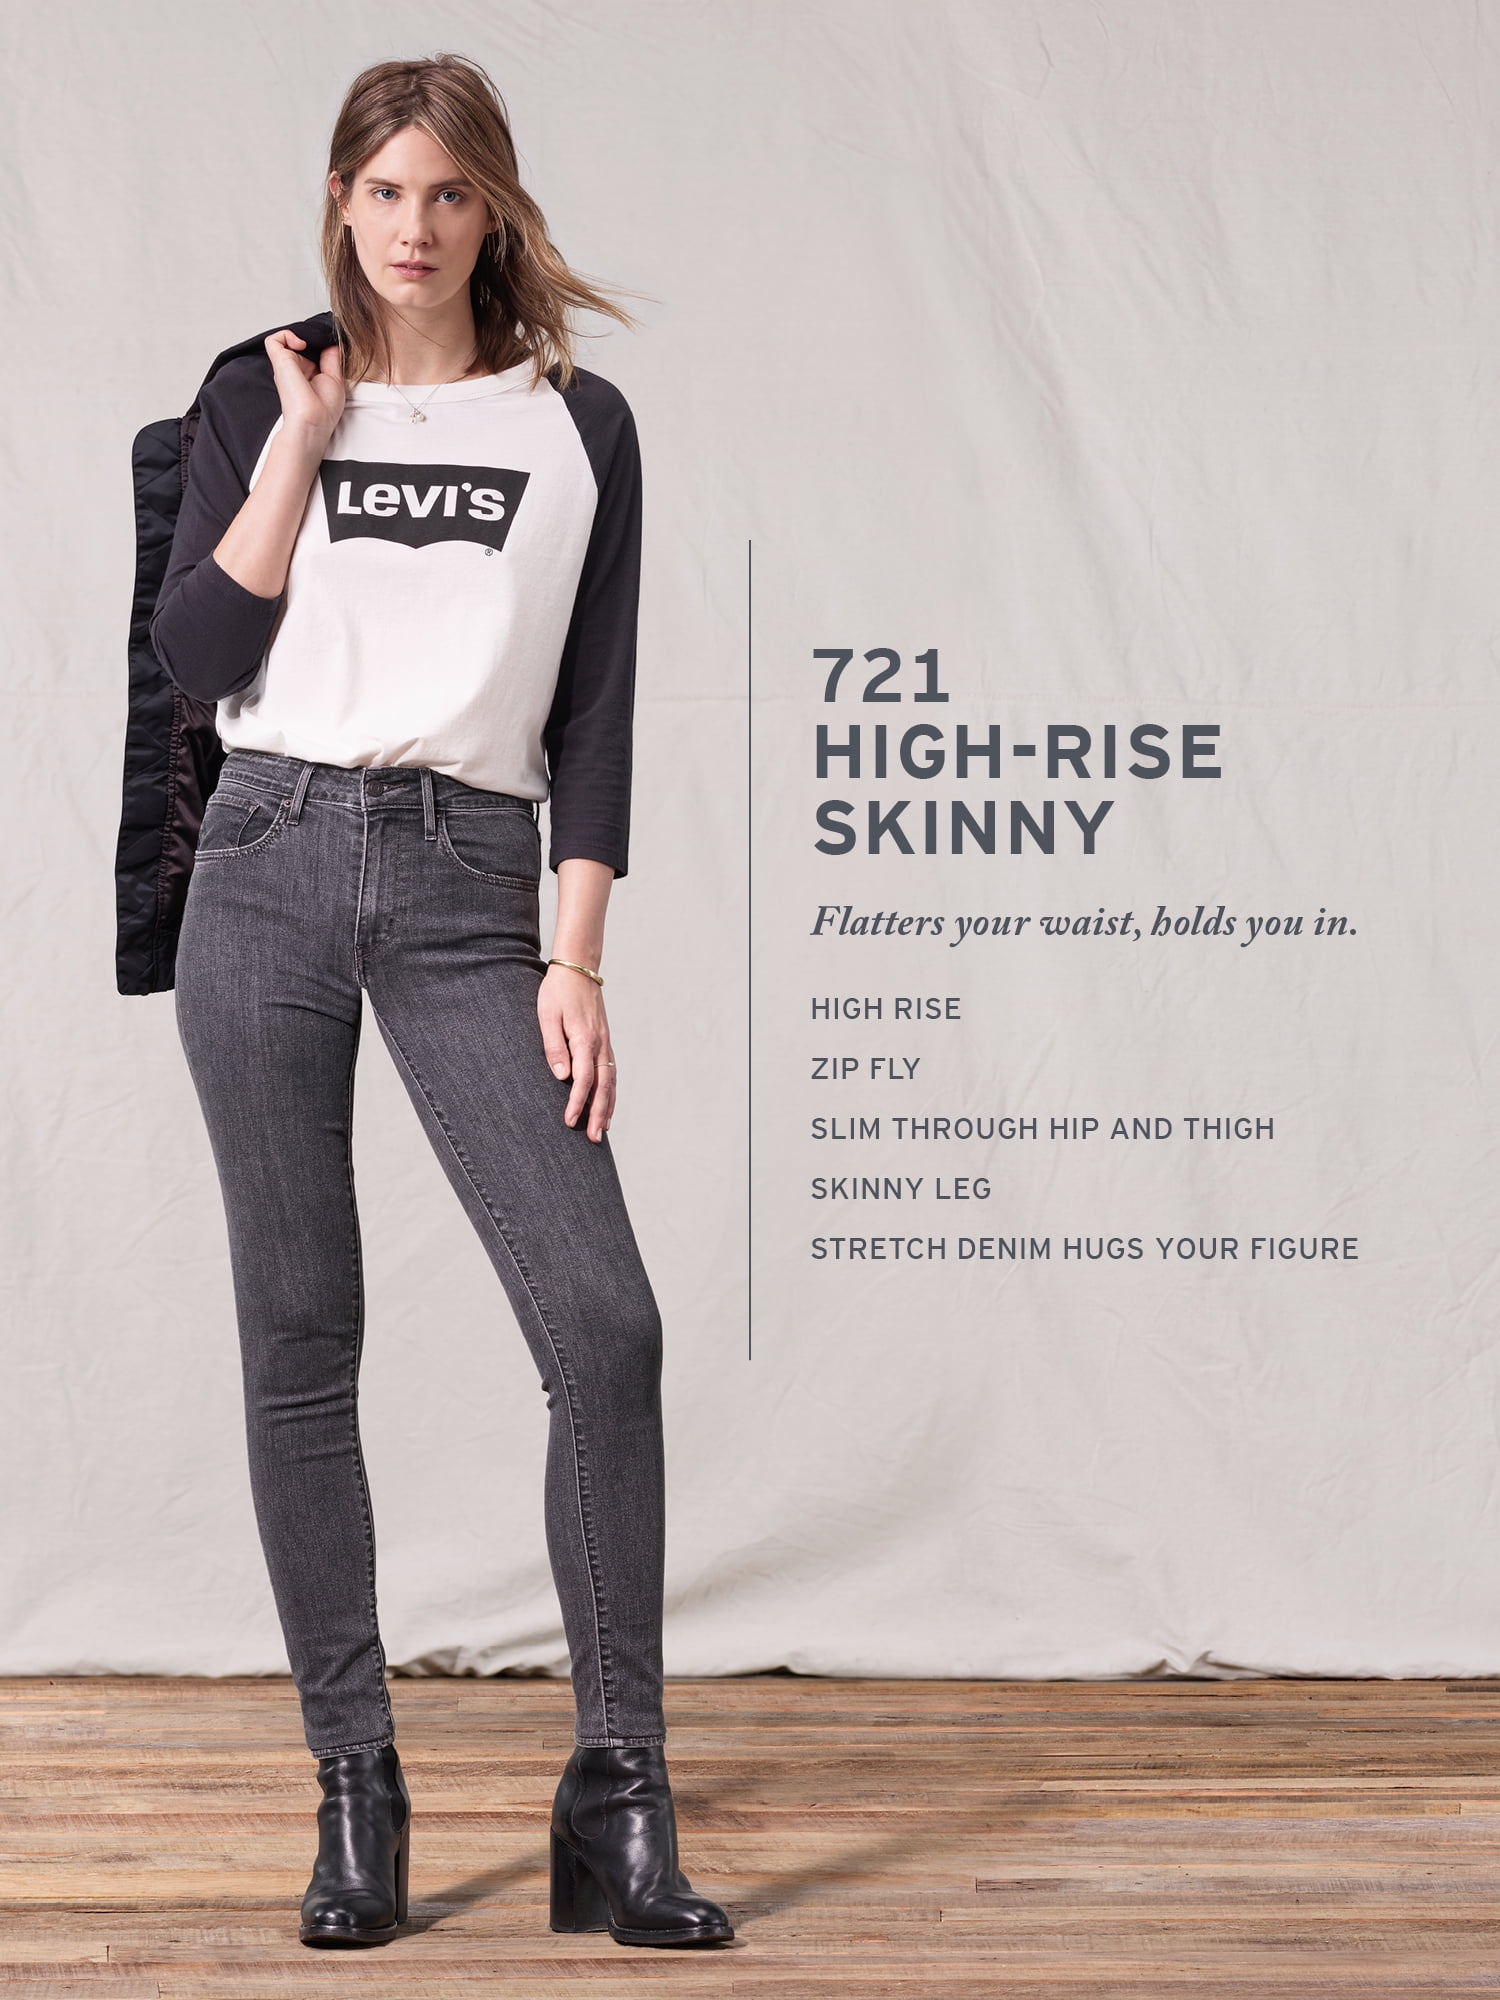 Levi's Original Red Tab Women's 721 High-Rise Skinny Jeans 